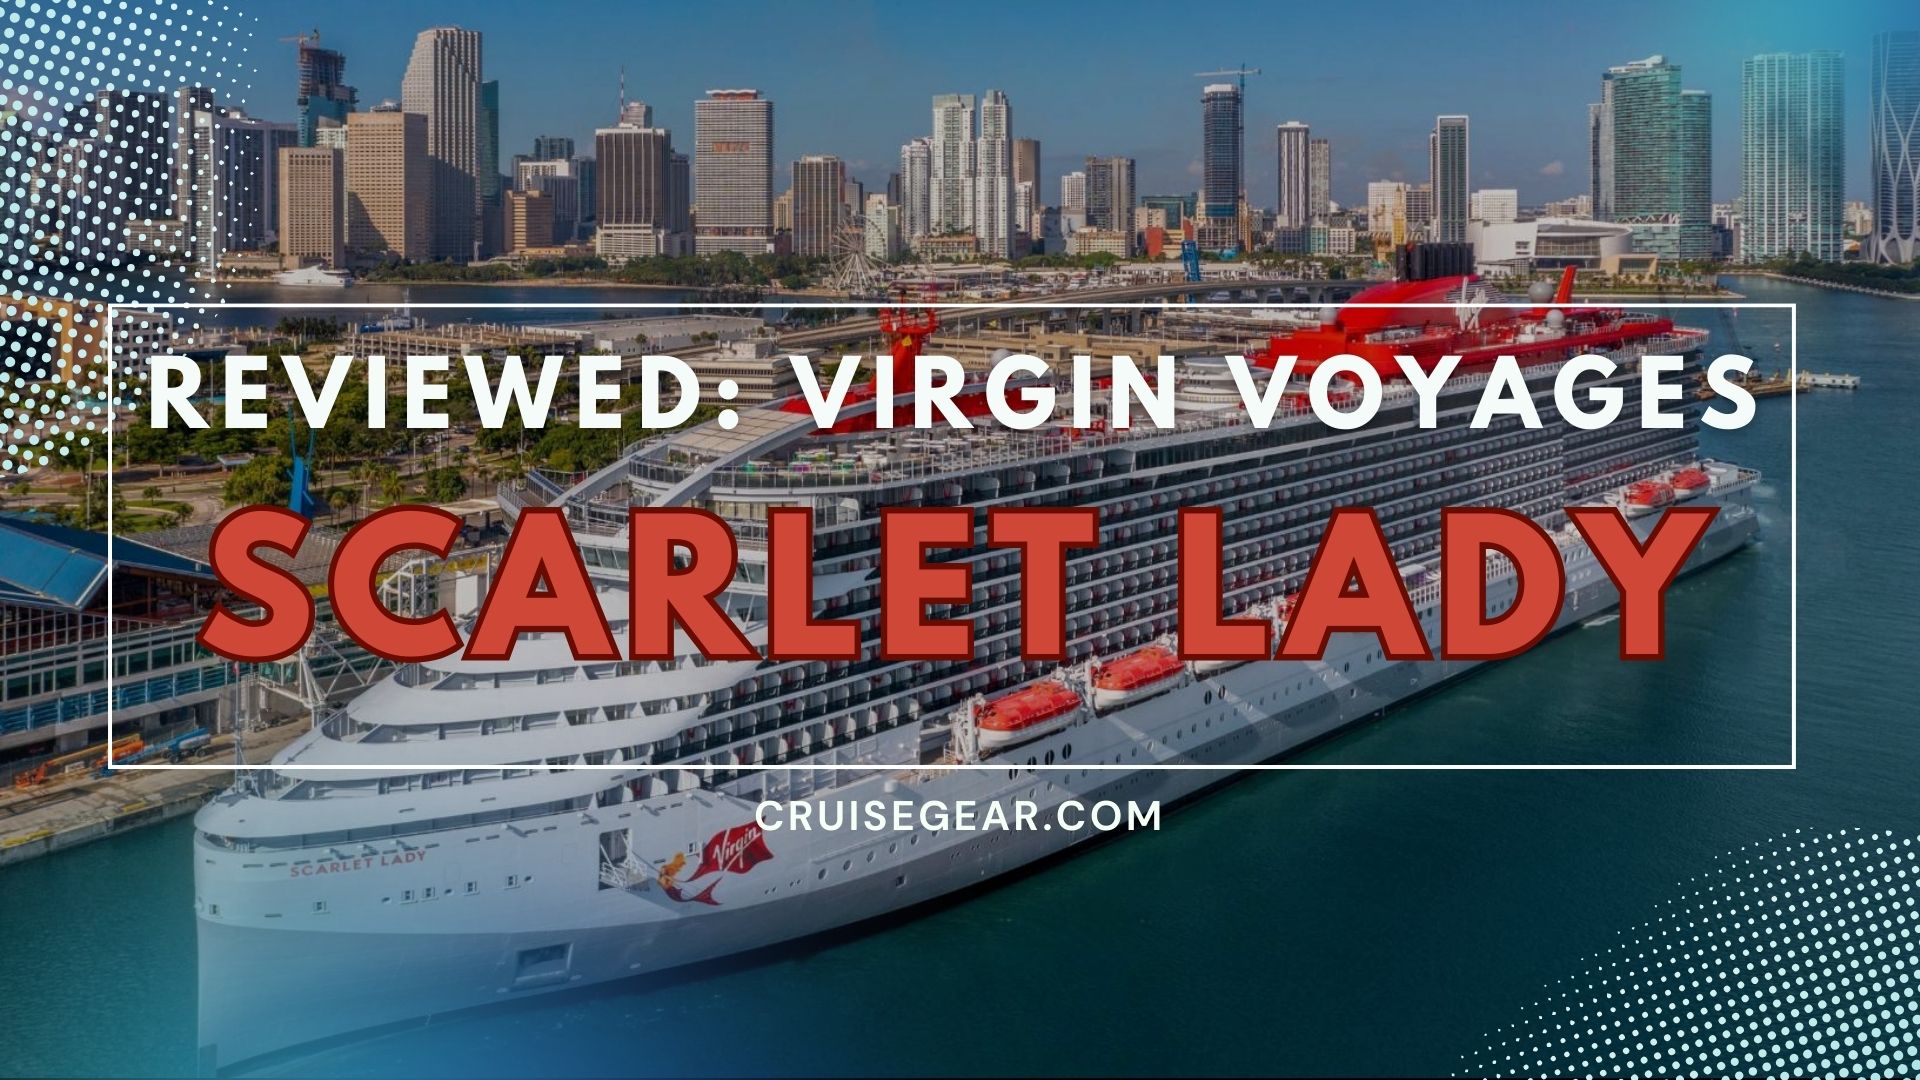 virgin voyages scarlet lady review